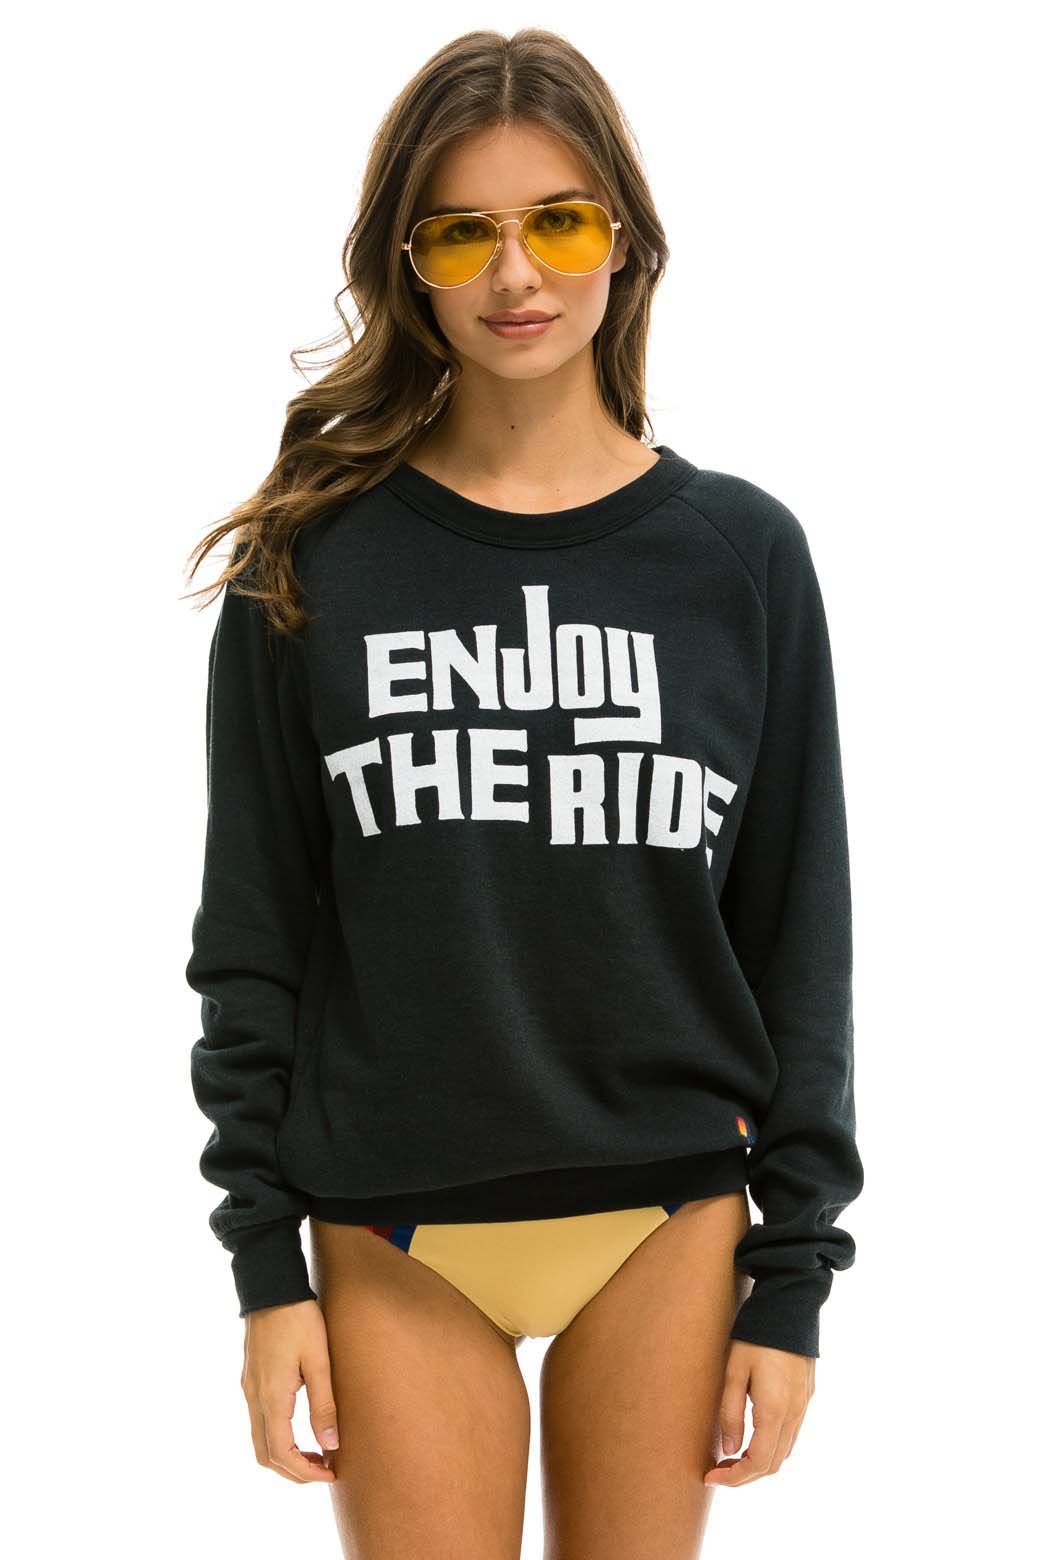 ENJOY THE RIDE SWEATSHIRT - CHARCOAL Sweatshirt FALL21 